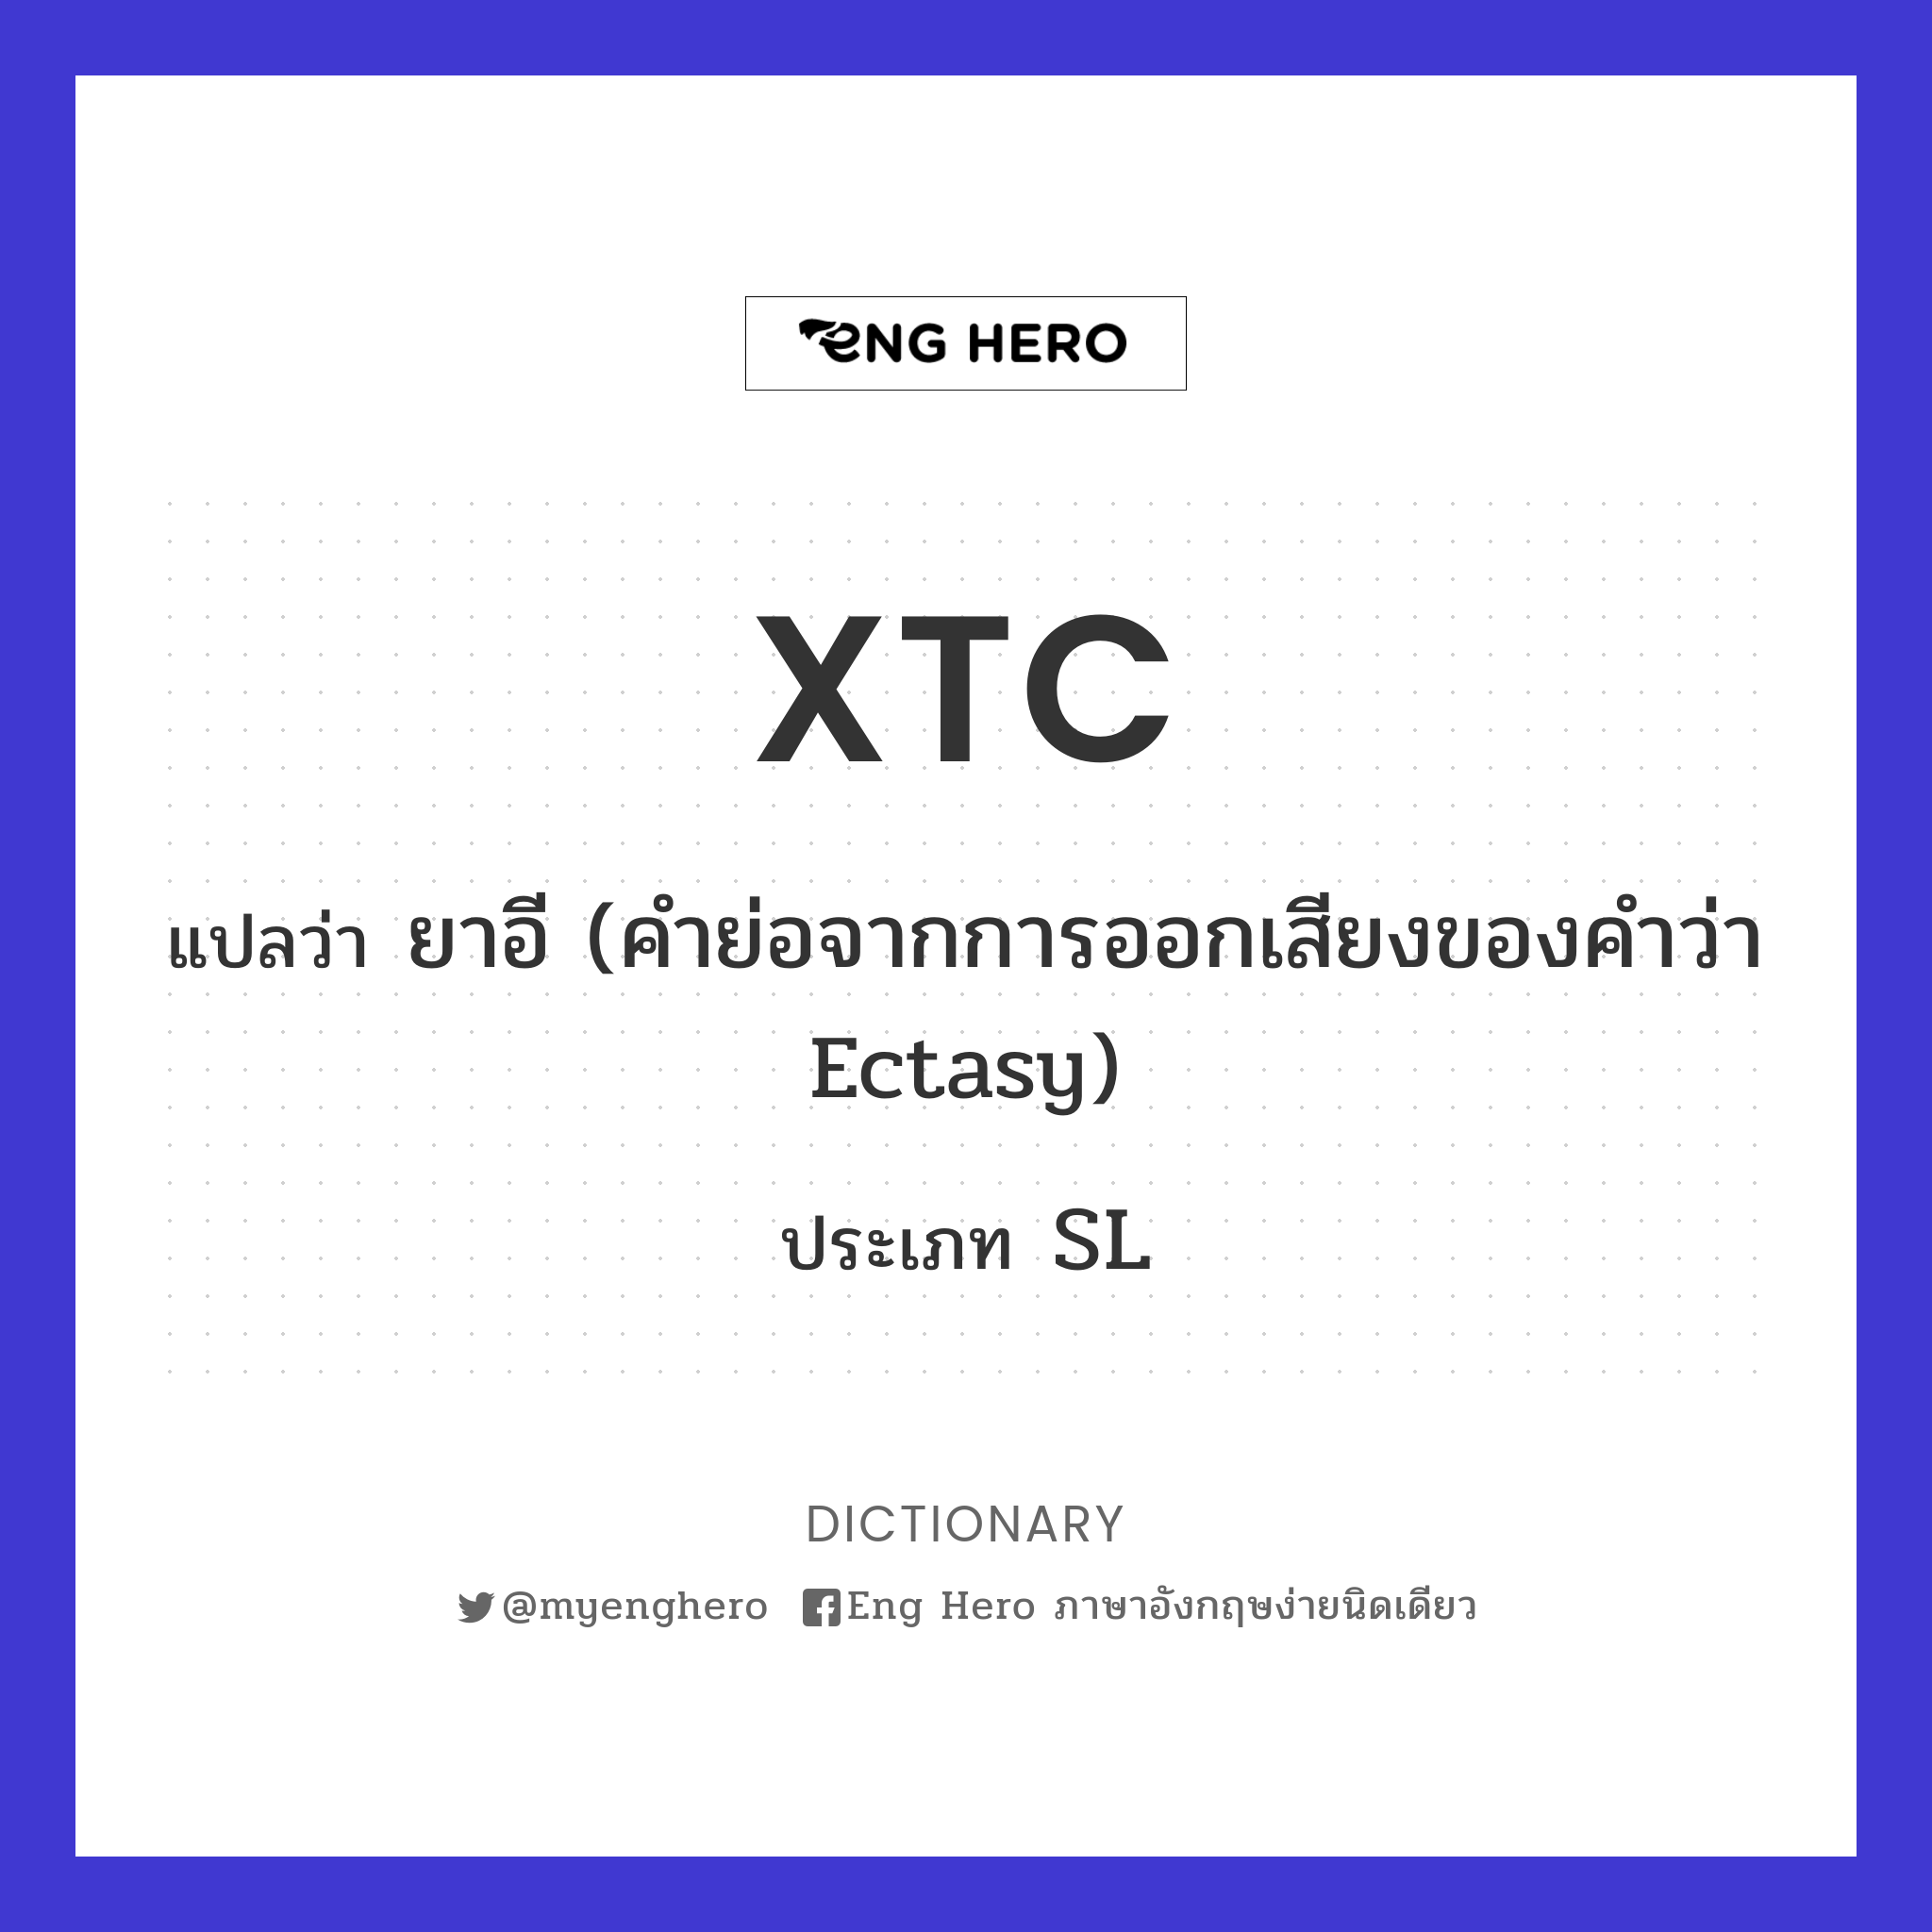 XTC